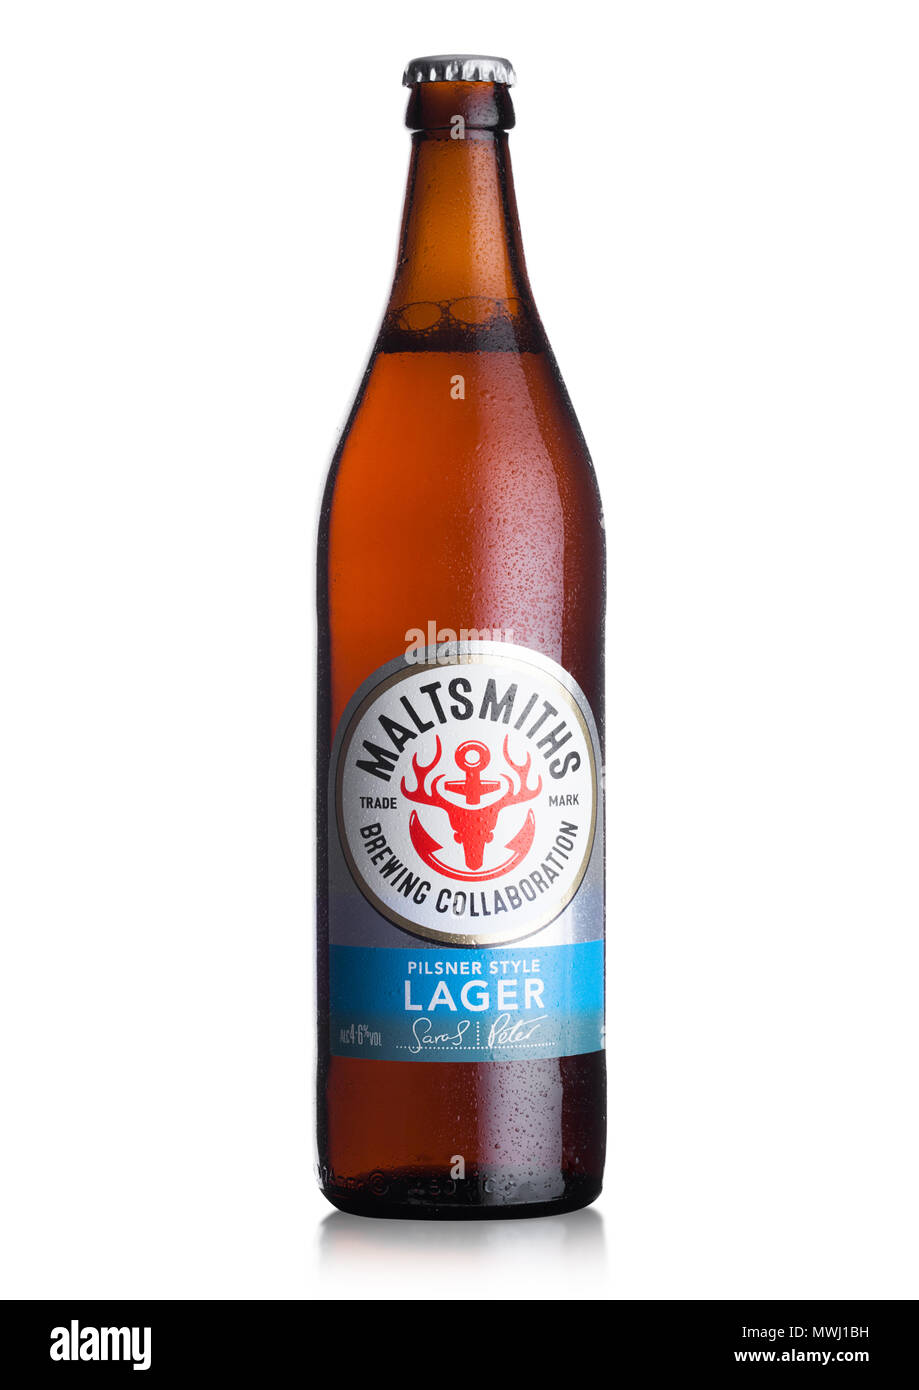 LONDON, UK - JUNE 01, 2018: Cold Bottle of Maltsmiths lager beer on white background Stock Photo